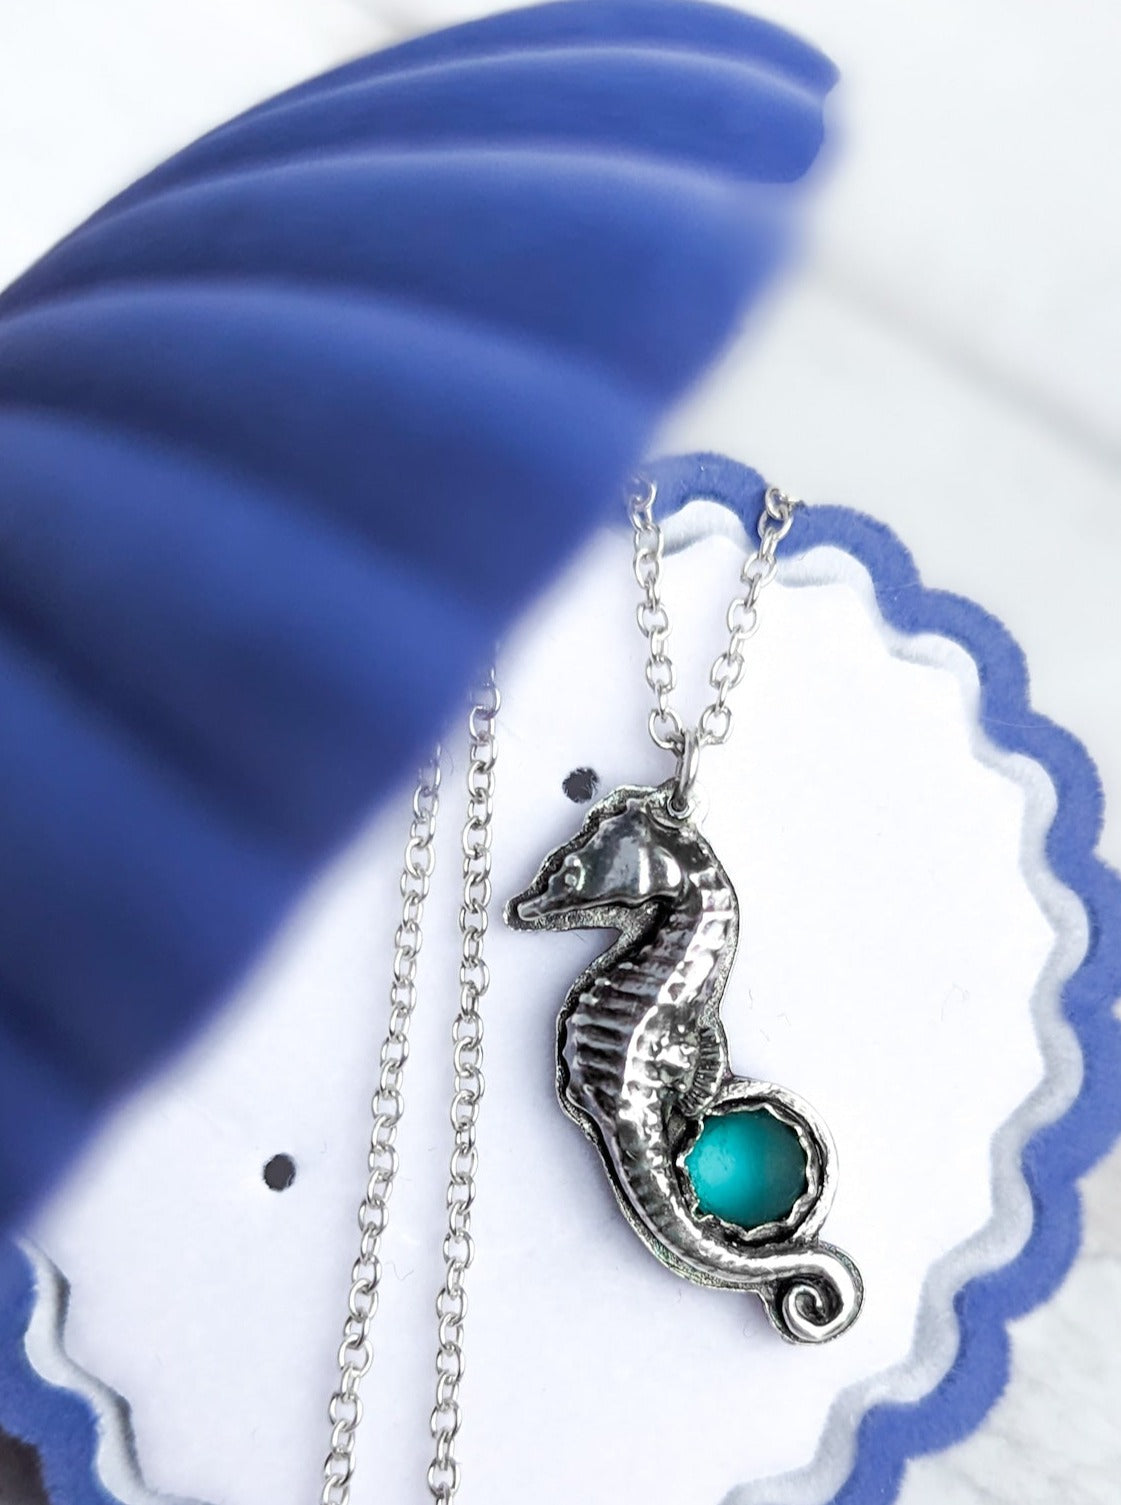 Darkened silver seahorse pendant with sea glass cabochon